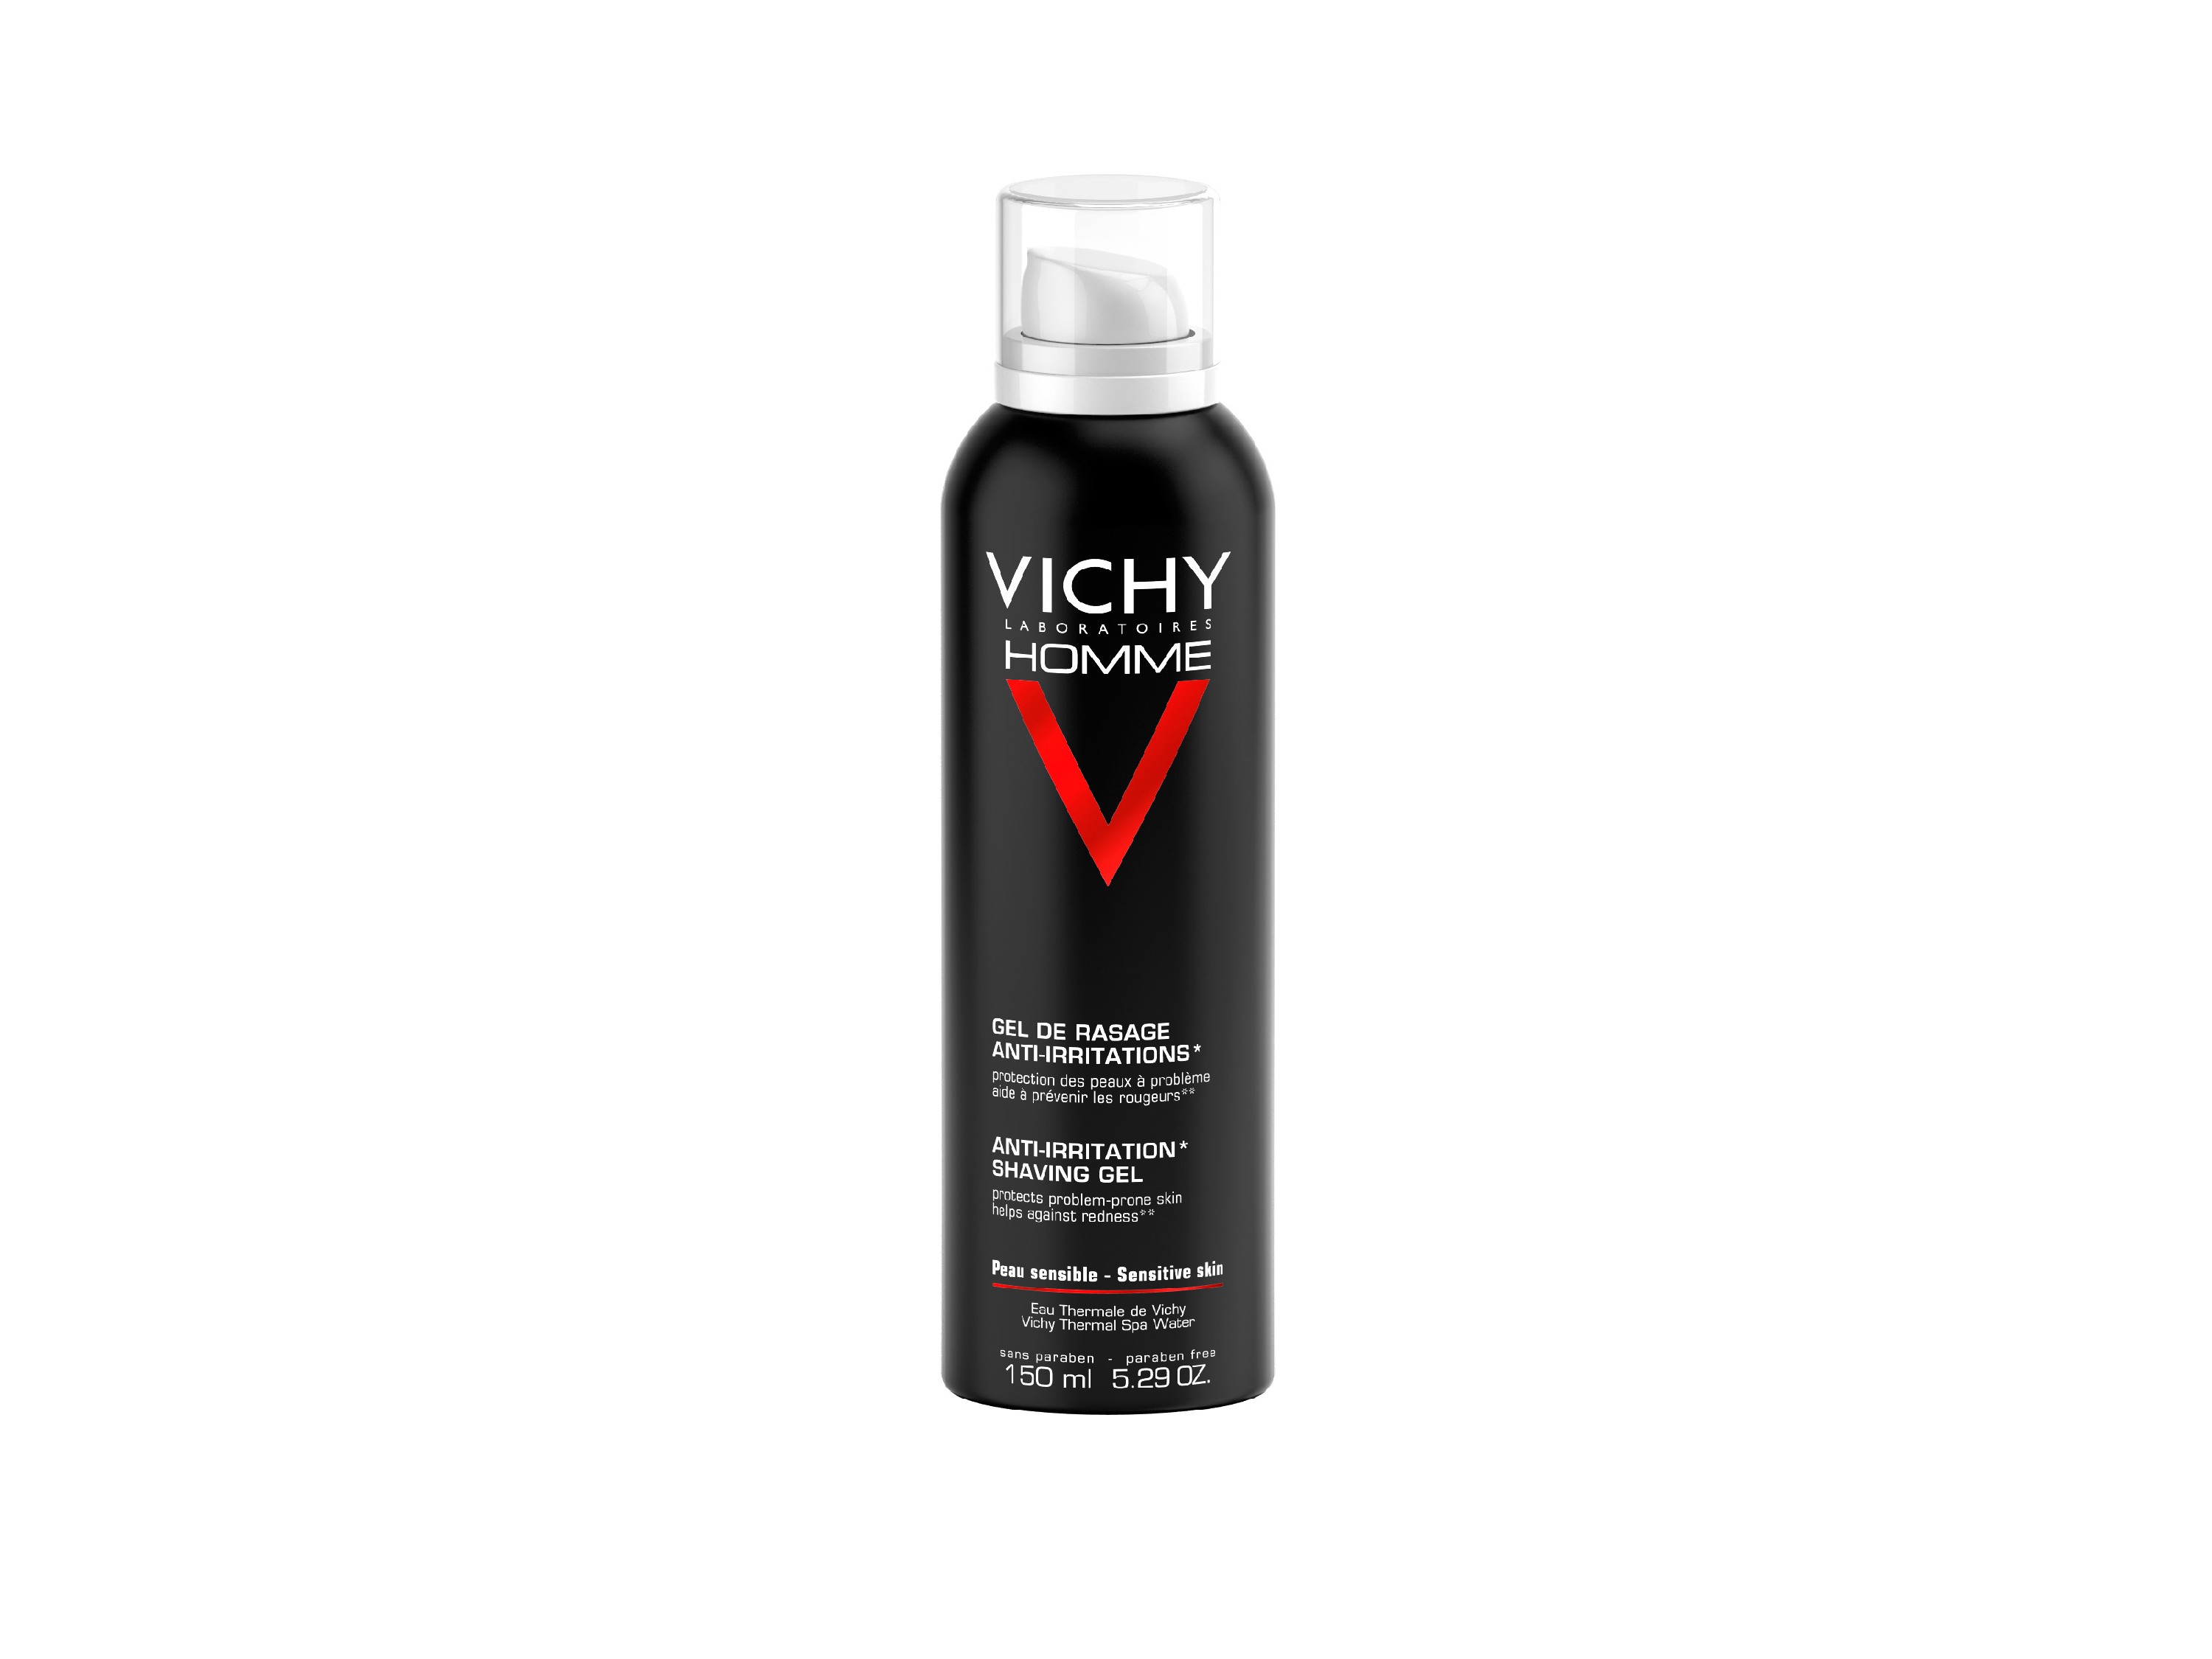 Vichy Homme Gel-Soap-Free Creme de barbear para pele sensível